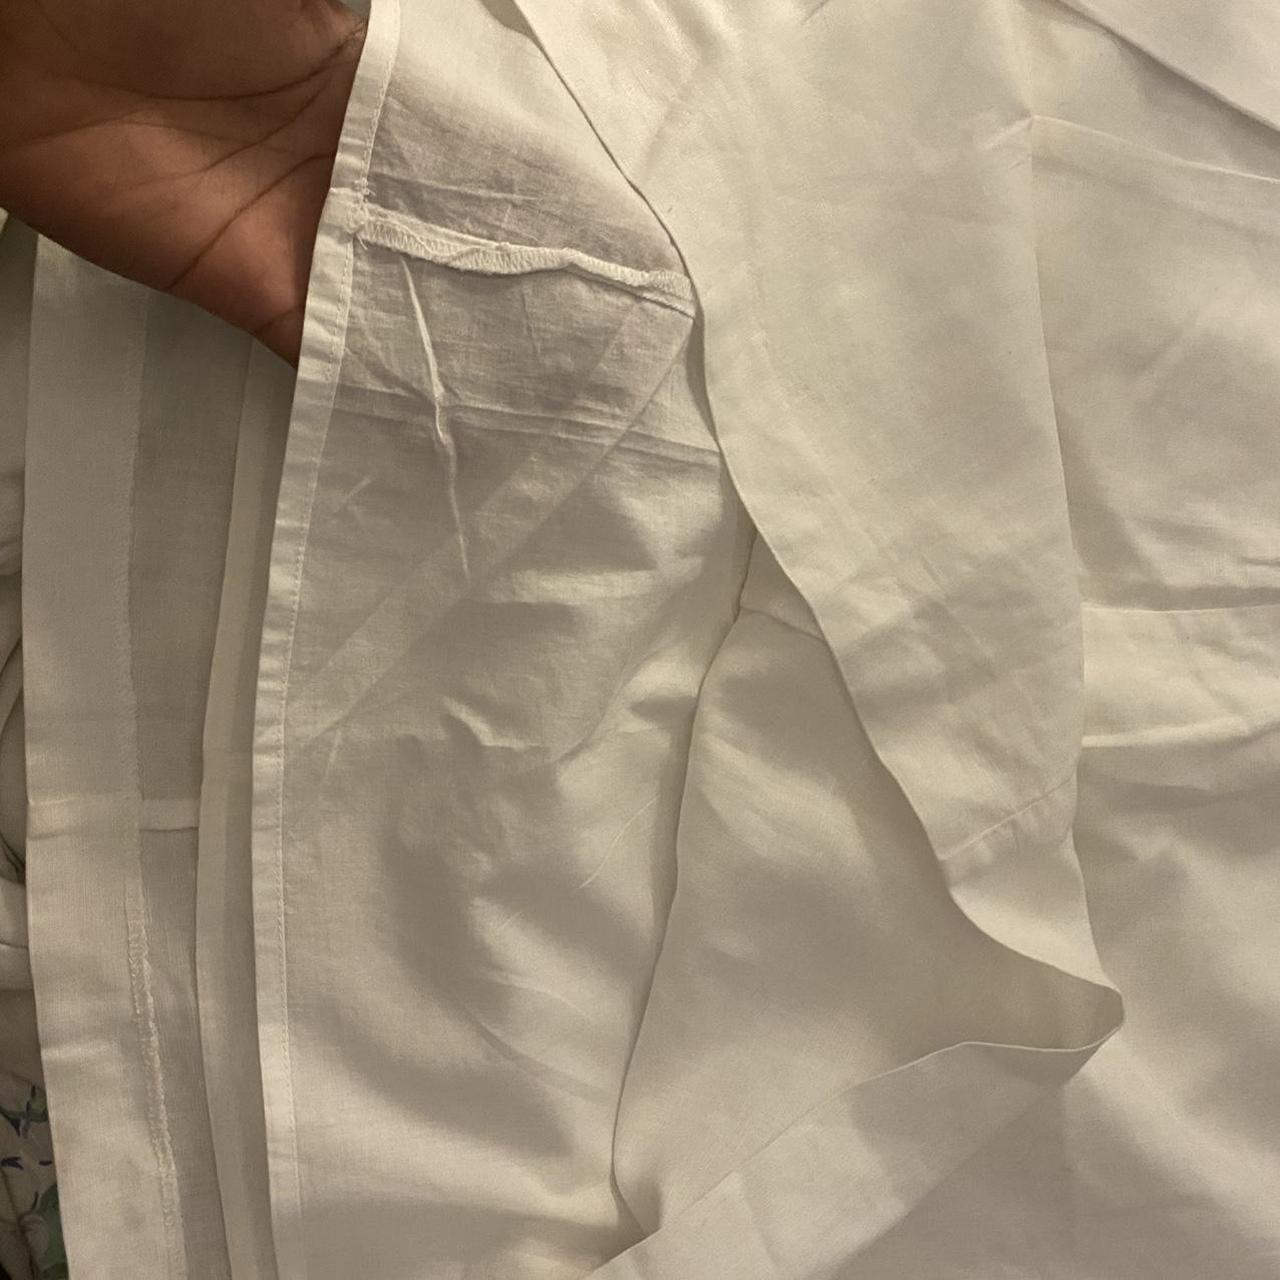 Product Image 4 - White Midi Skirt 🕊

- nice